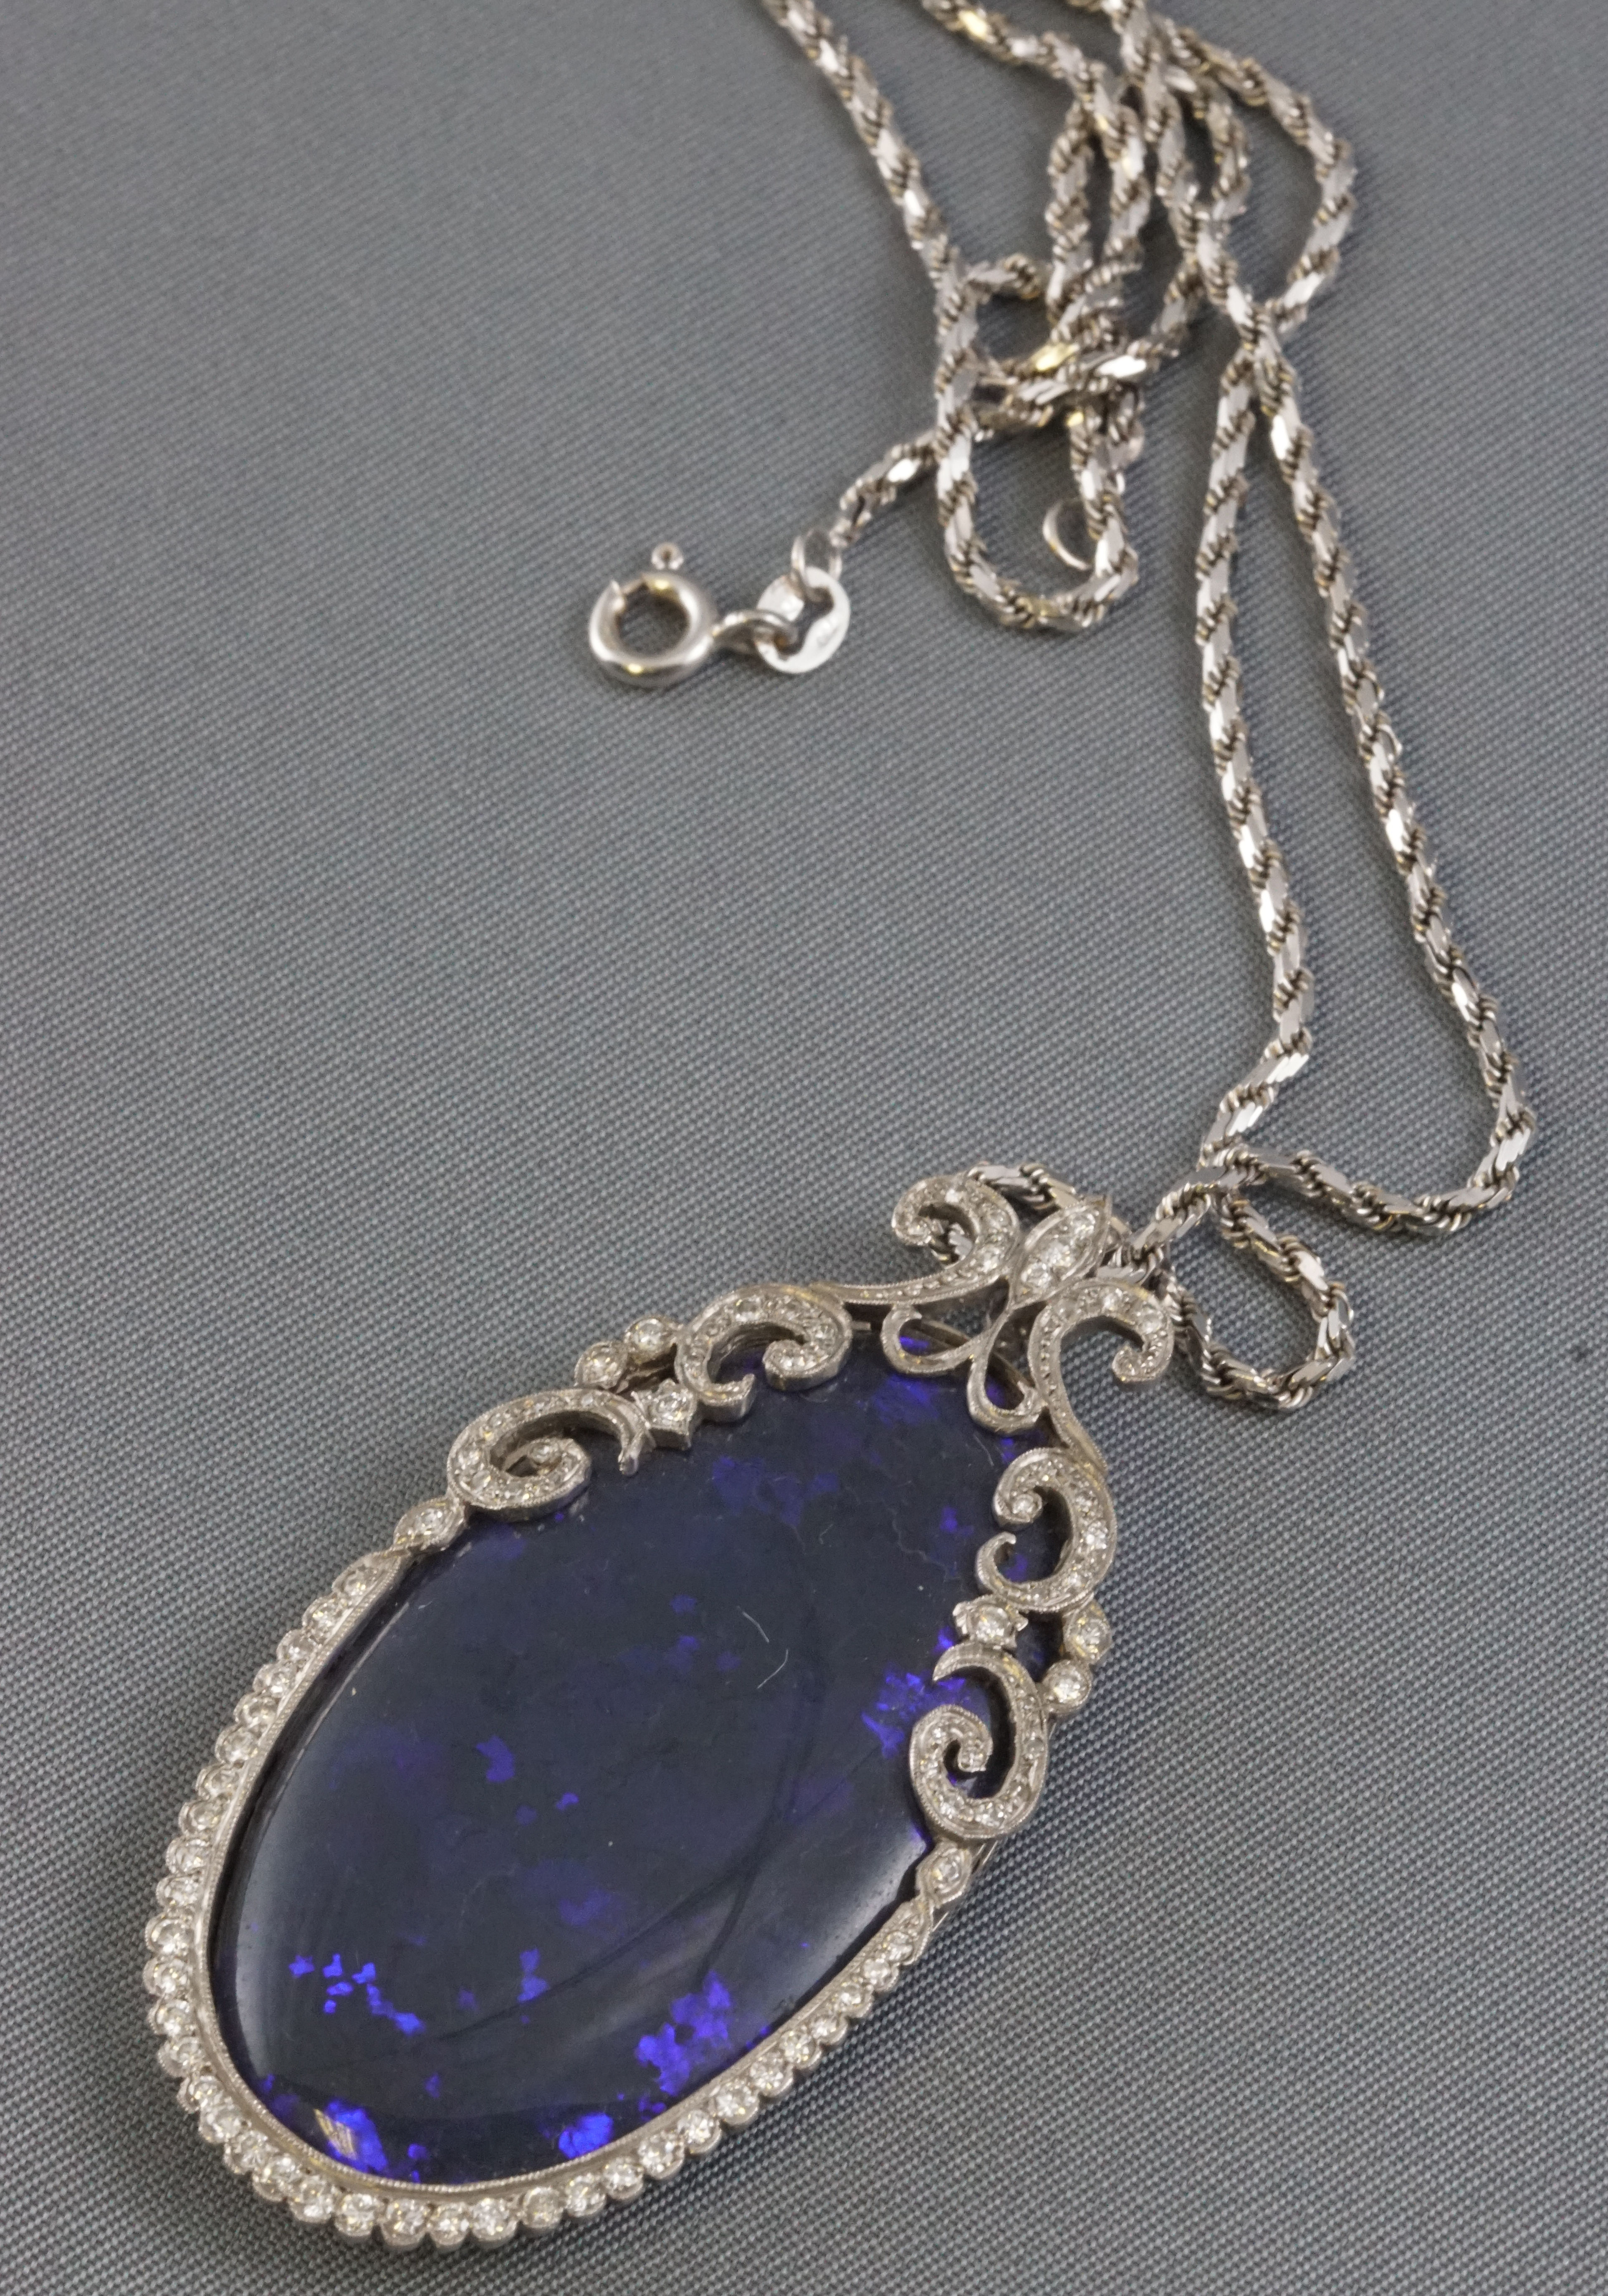 A white metal Edwardian style pendant principally set with an oval cabochon cut black opal